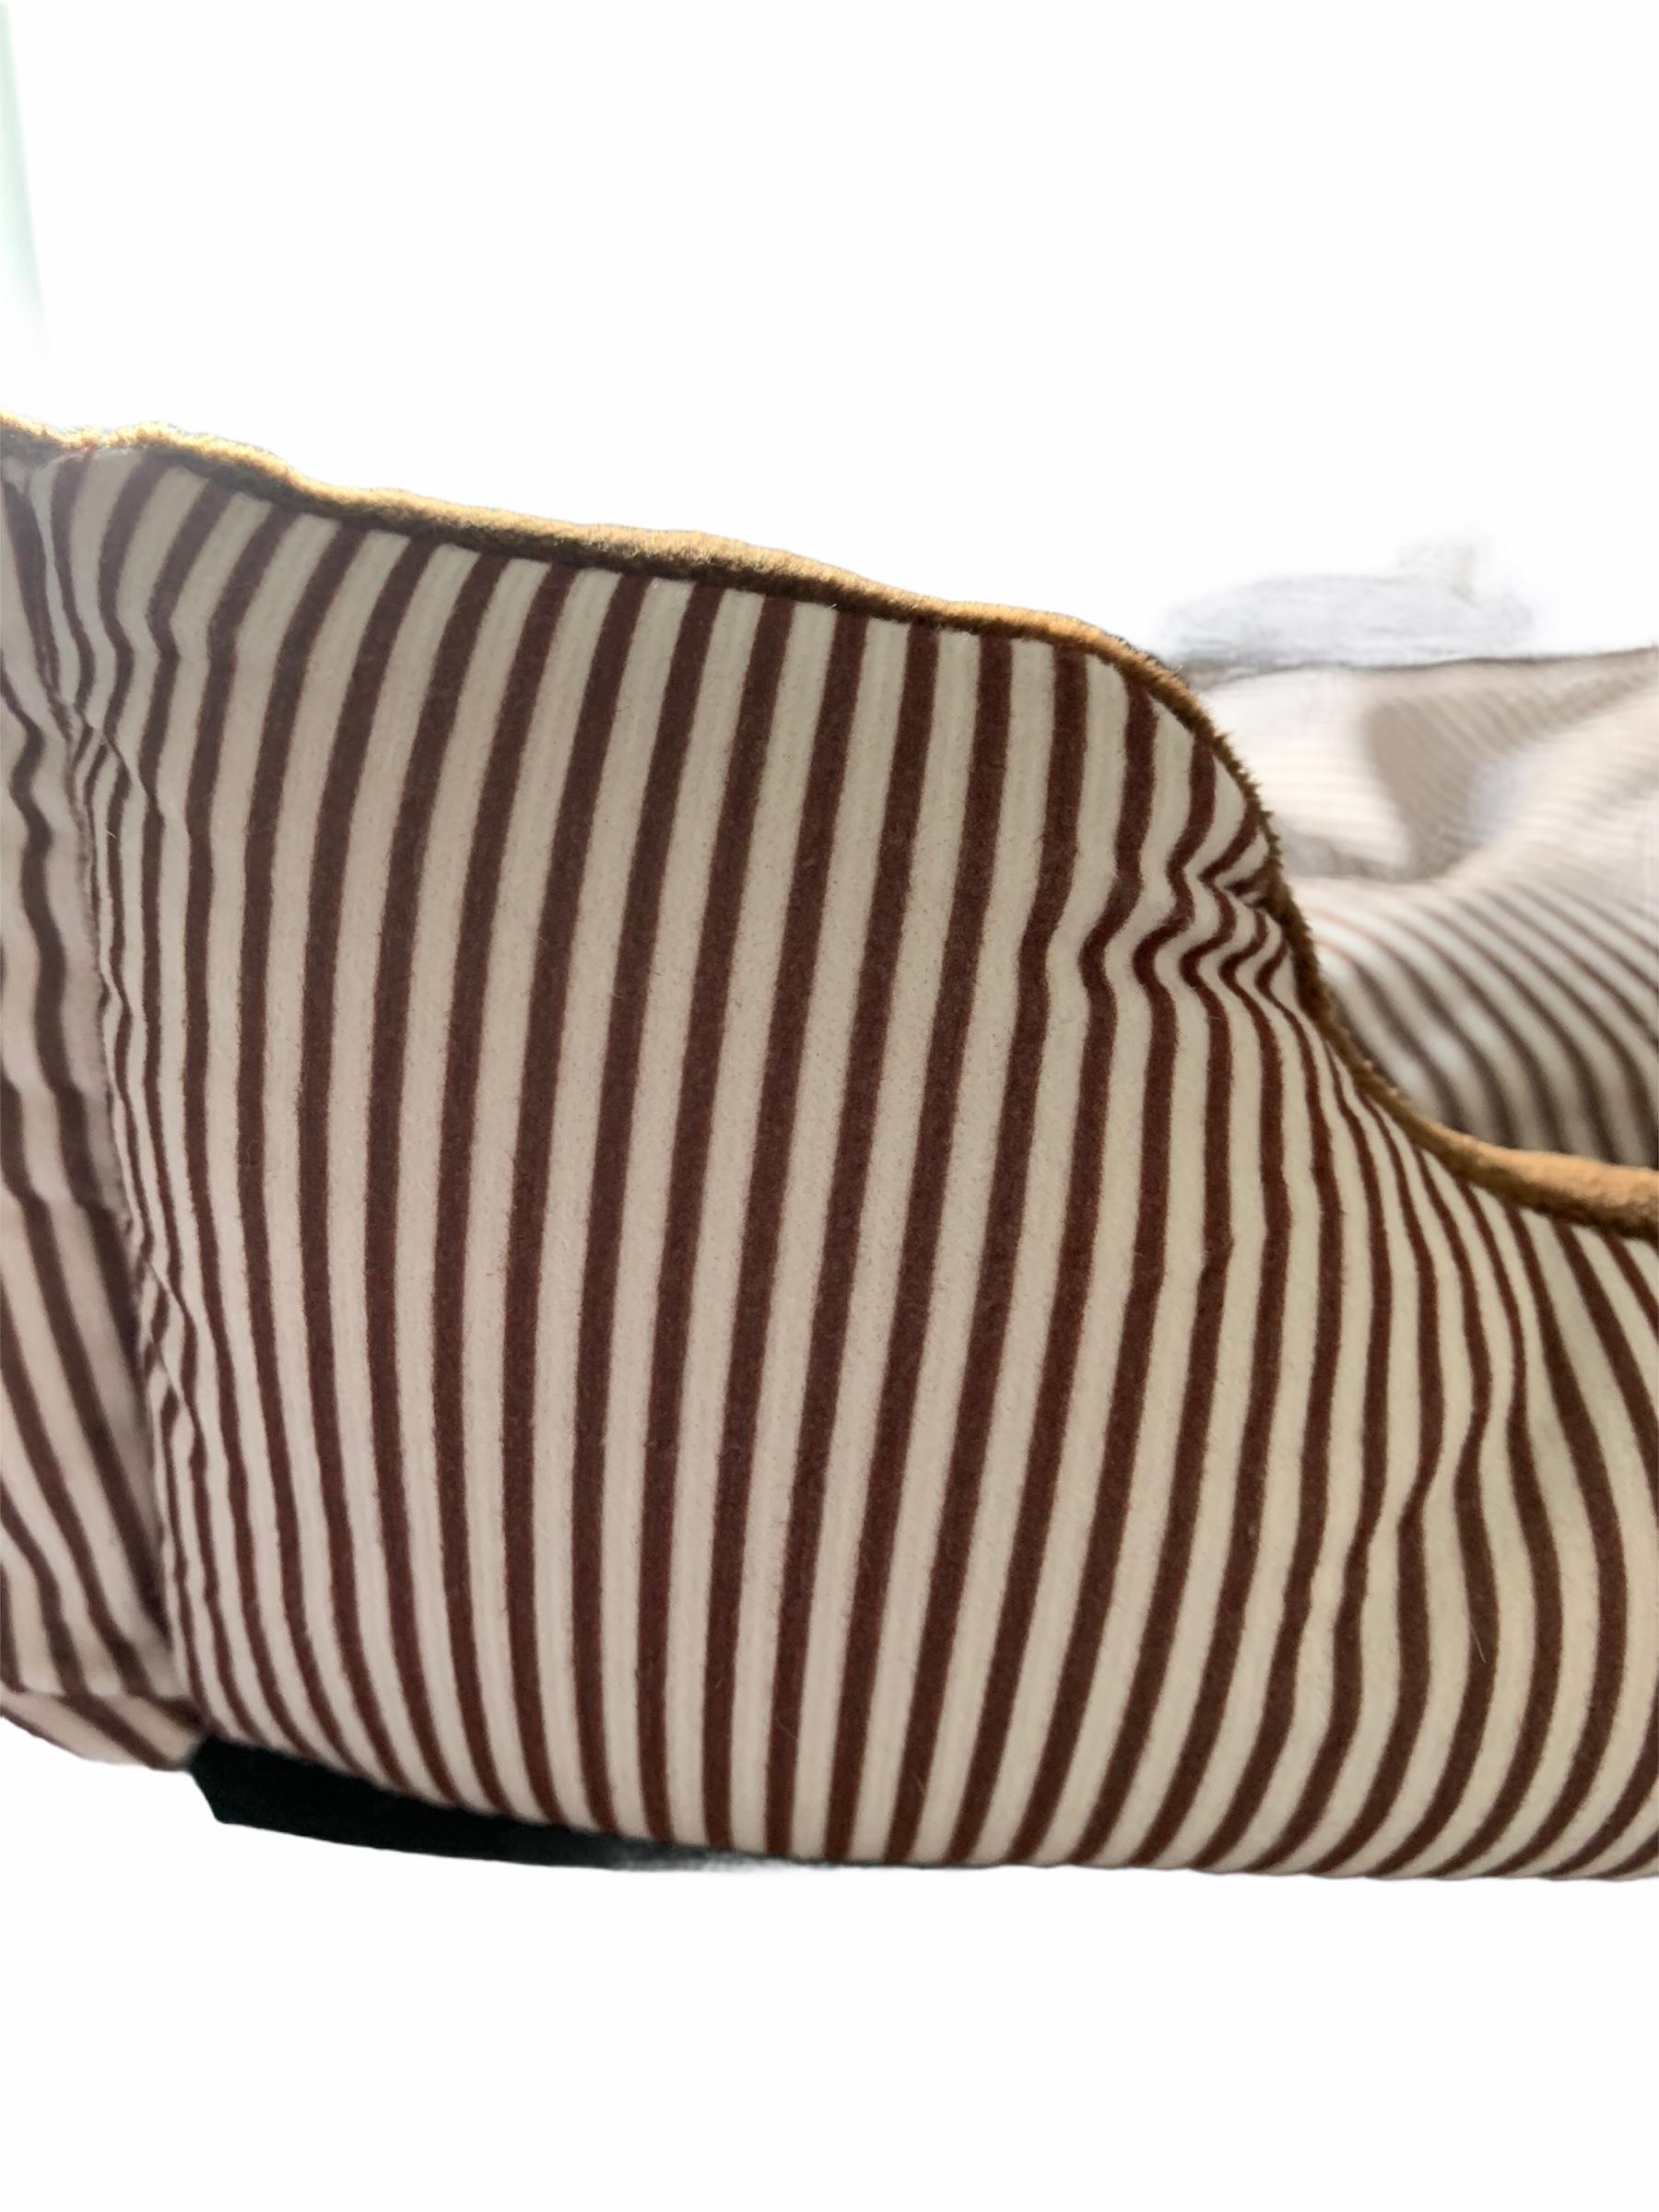 Striped pattern dog bed